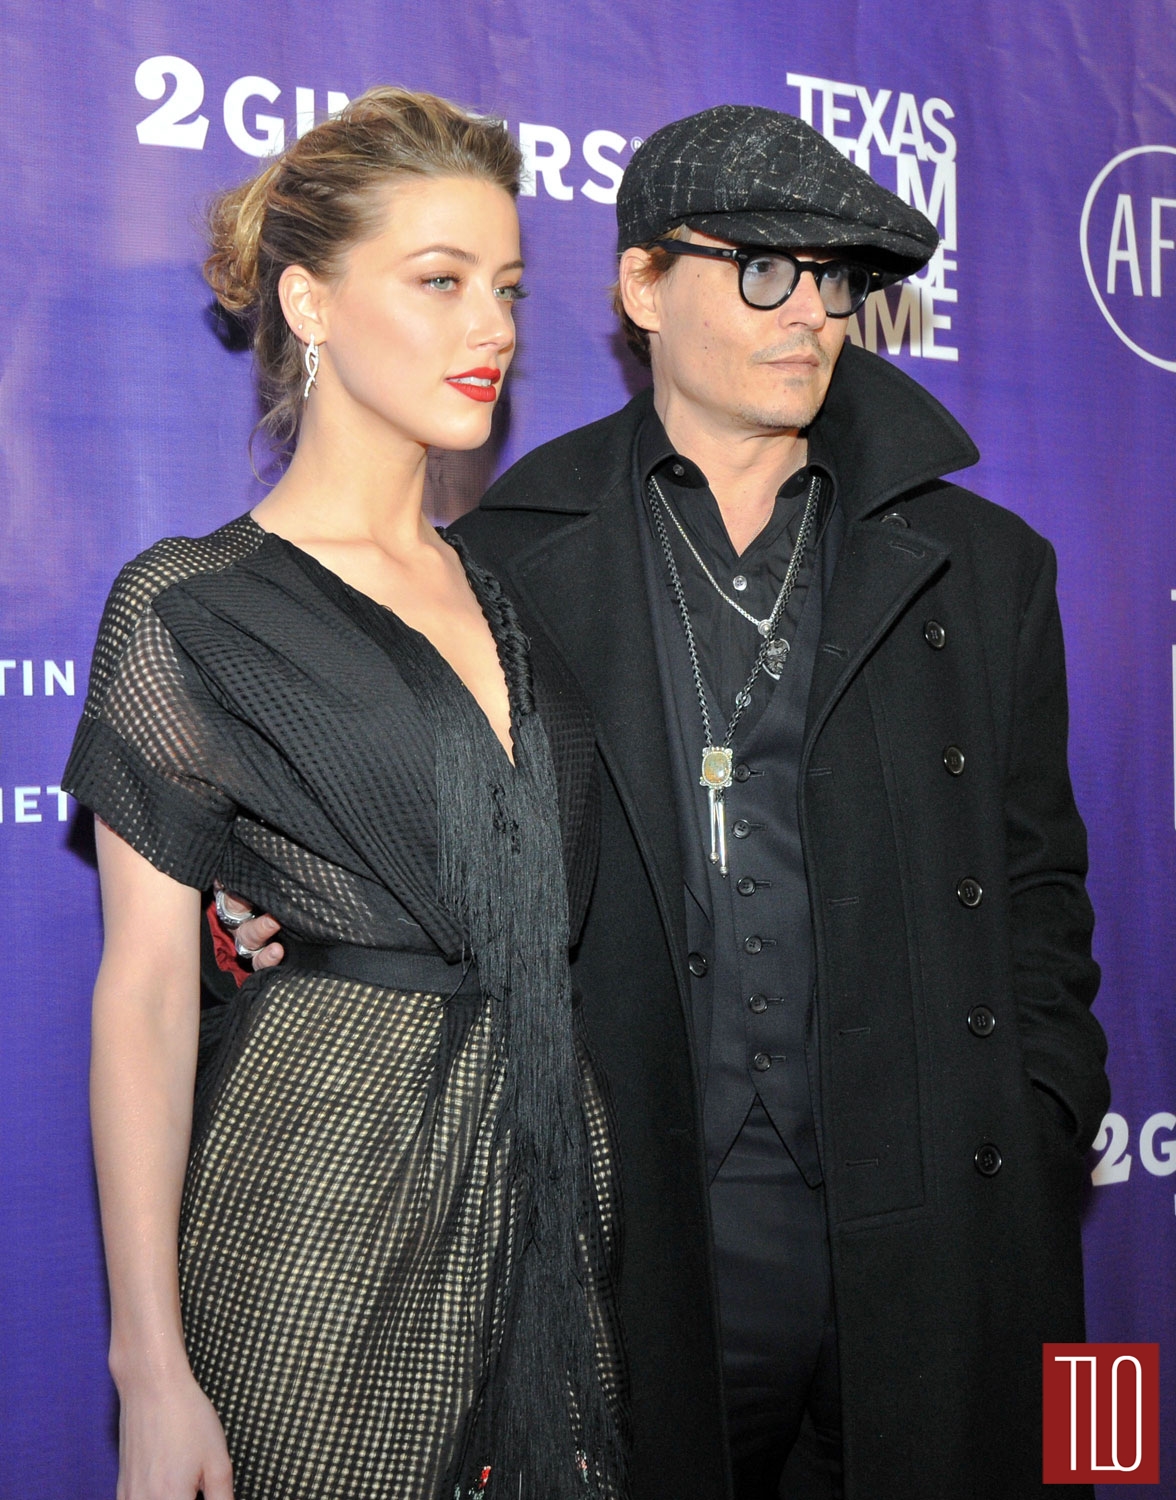 Amber-Heard-Johnny-Depp-Texas-Film-Awards-Tom-Lorenzo-Site-TLO (1) .